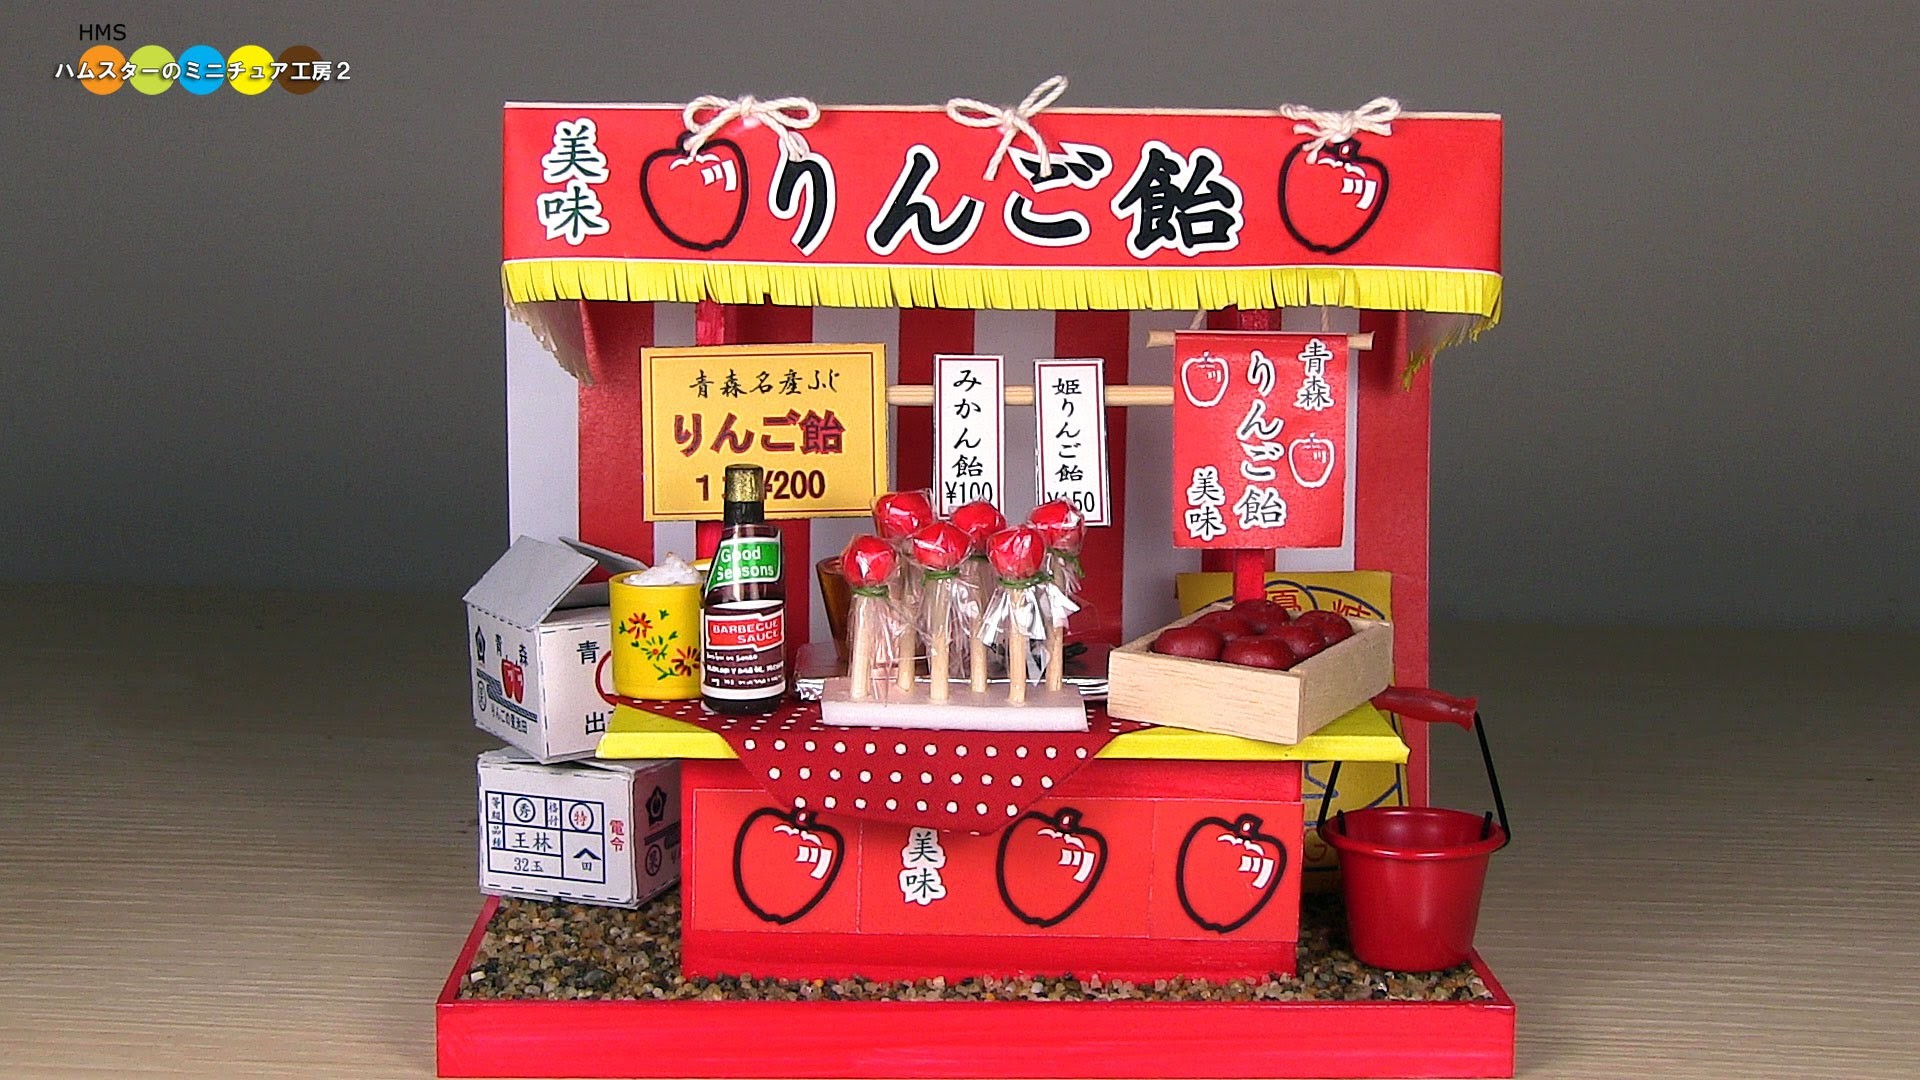 Billy Miniature Japanese Fair Stall Candy Apple